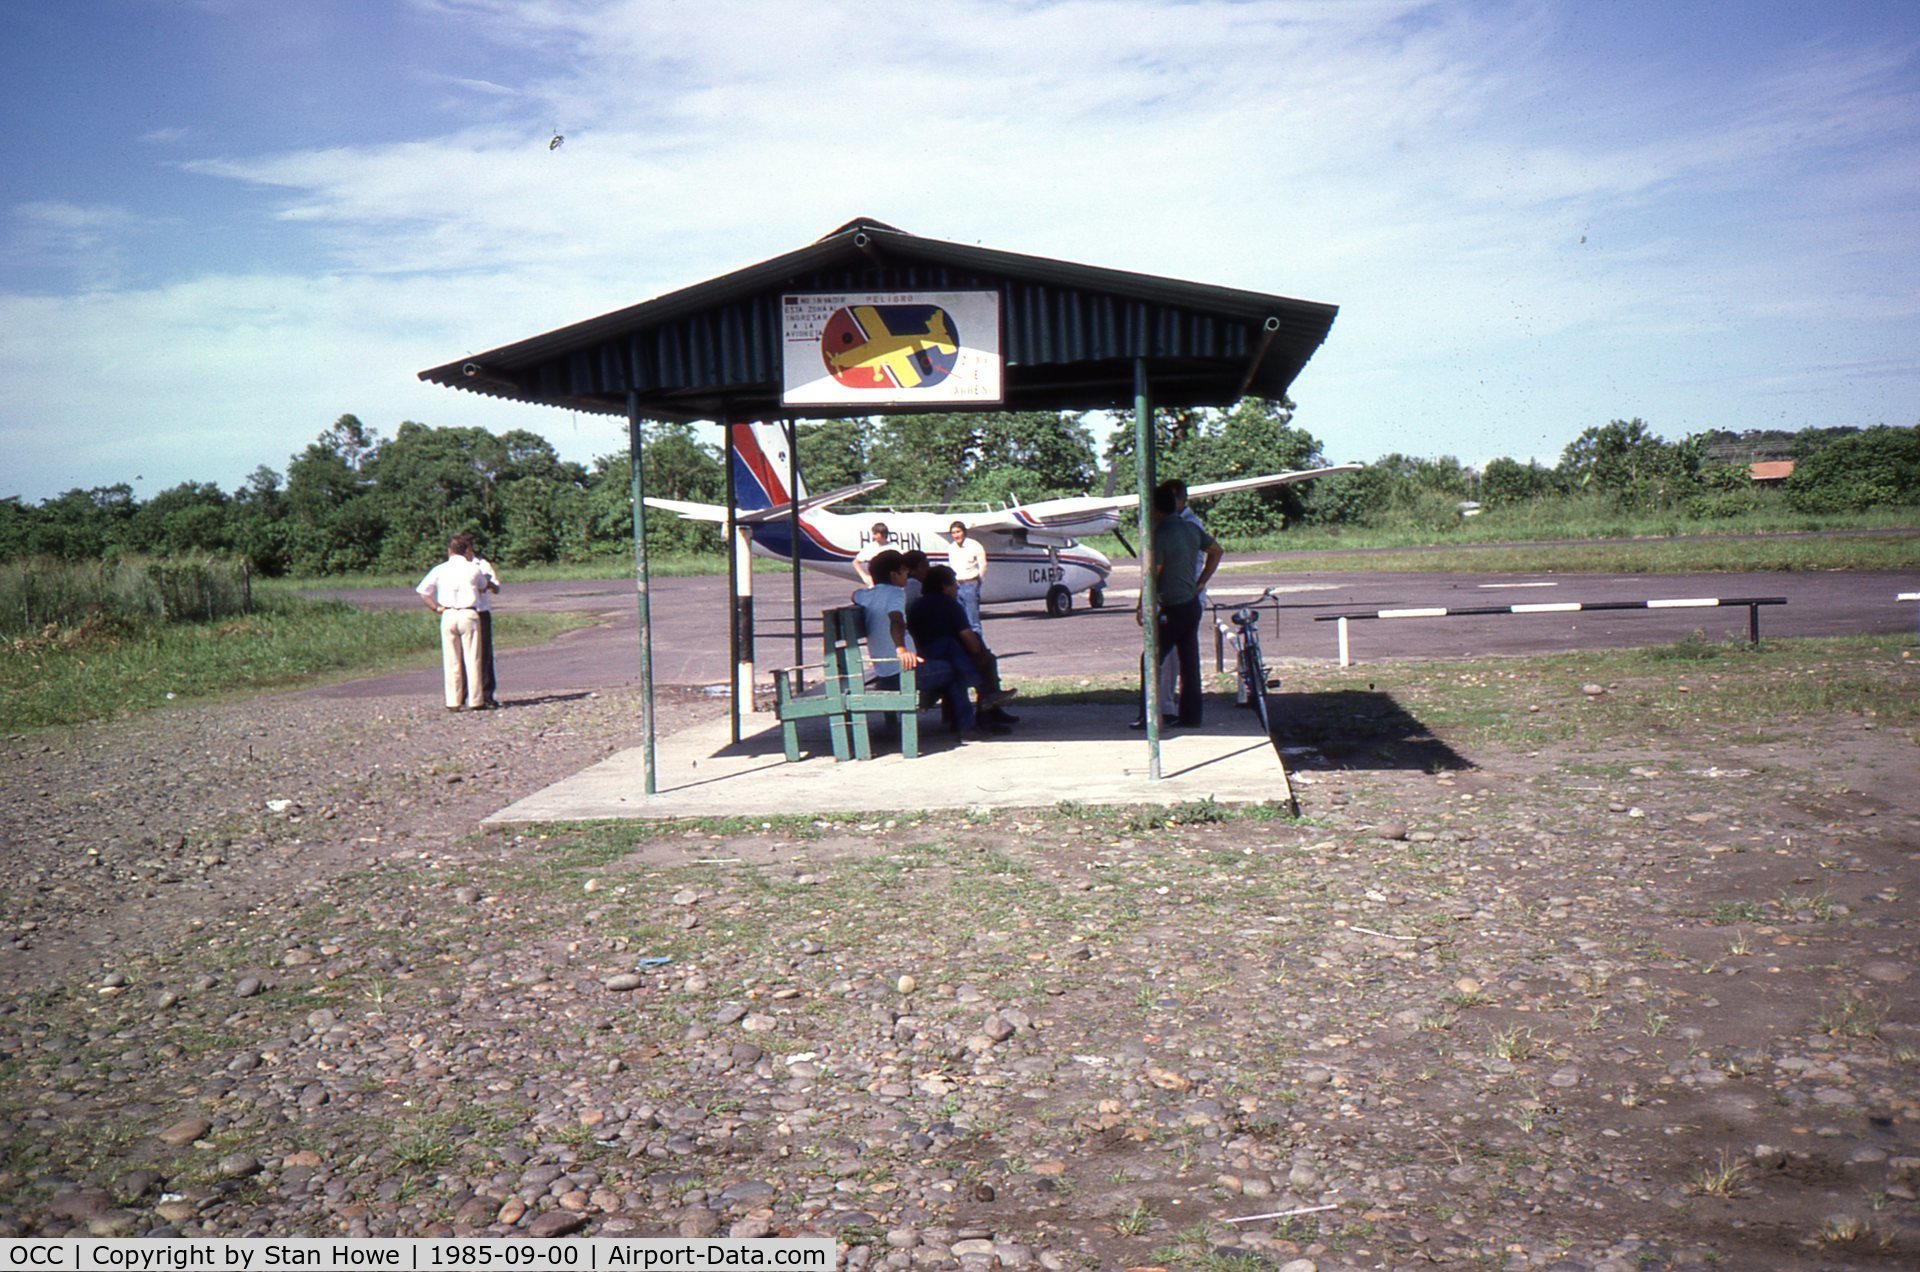 Francisco de Orellana Airport, Coca Ecuador (OCC) - Passenger reception shed in 1985.